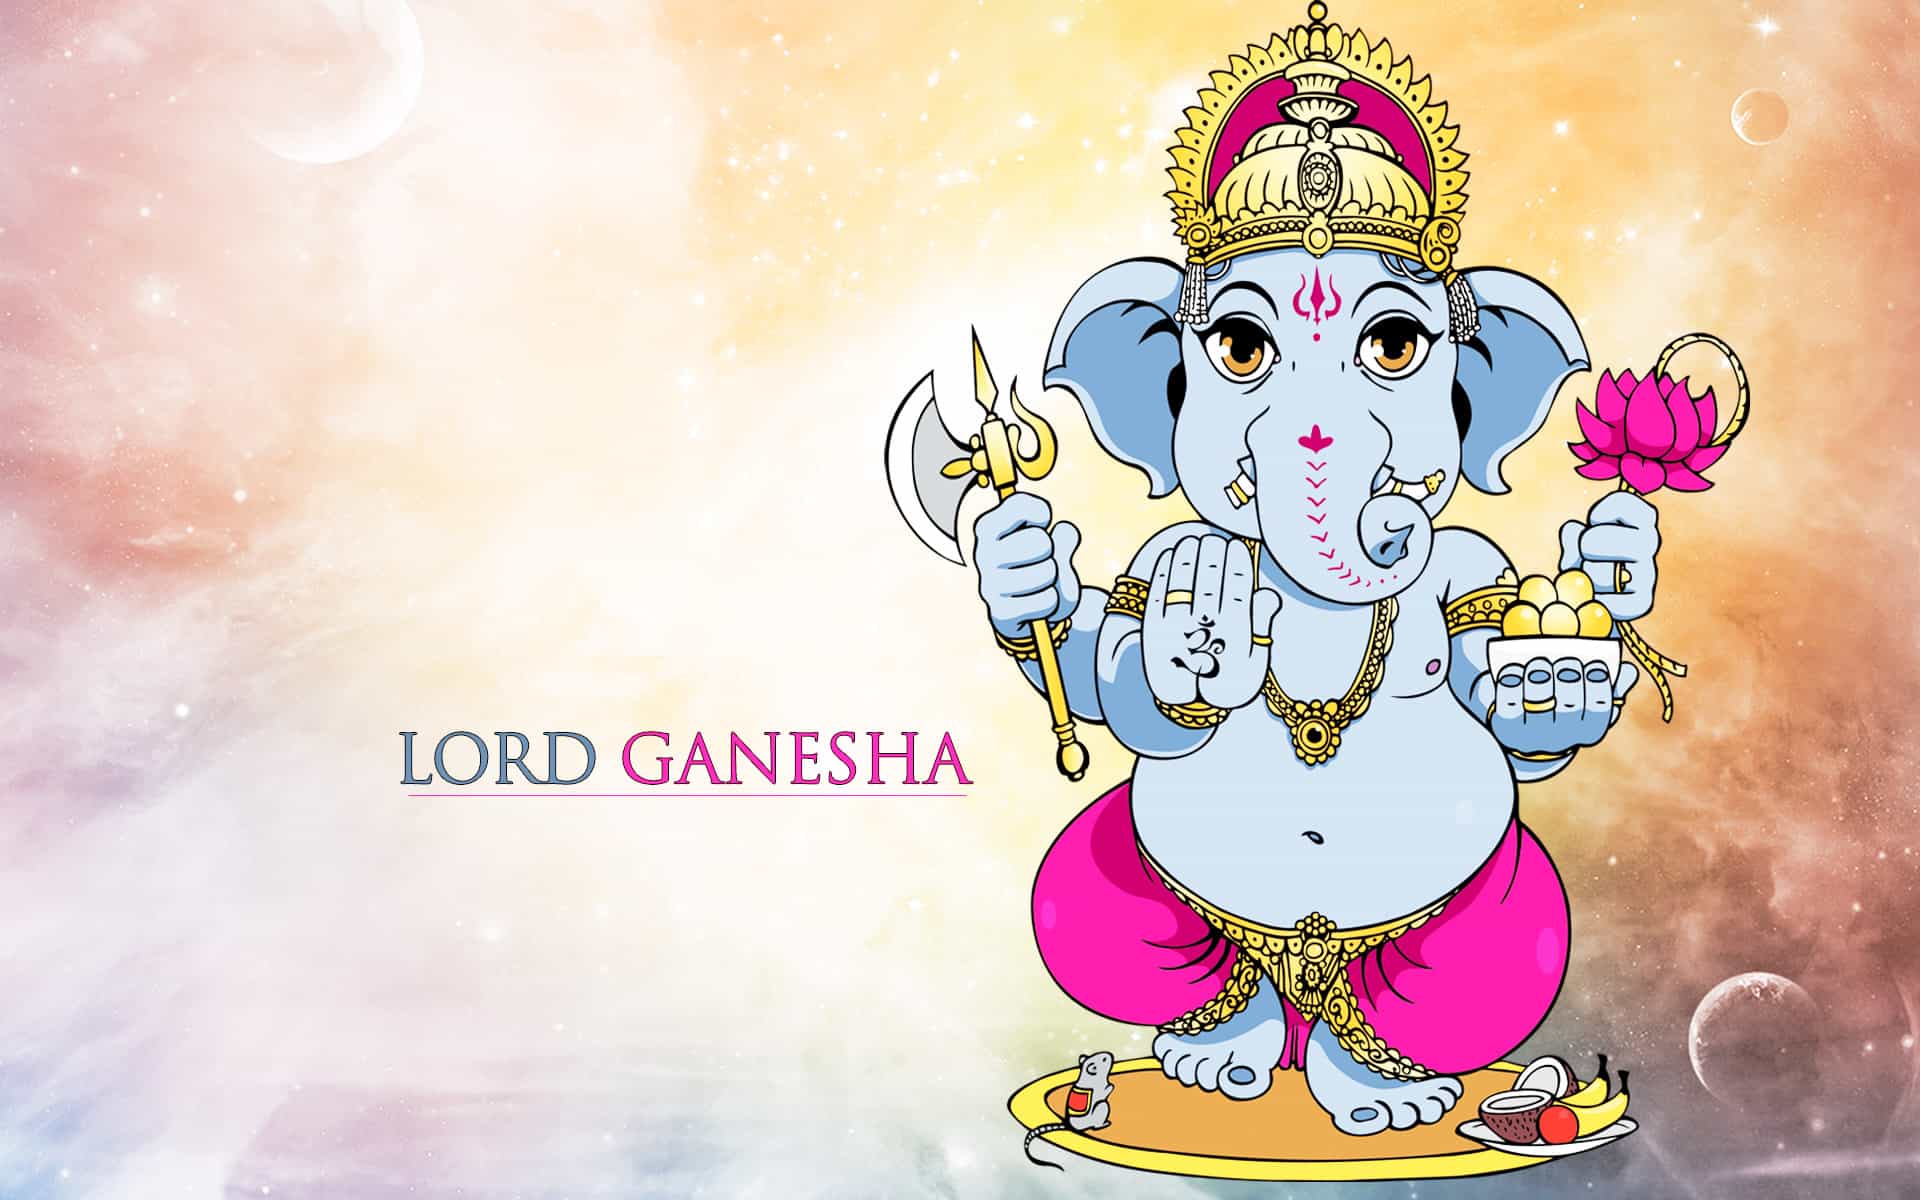 Lord-ganesha-qualities-wonderparenting